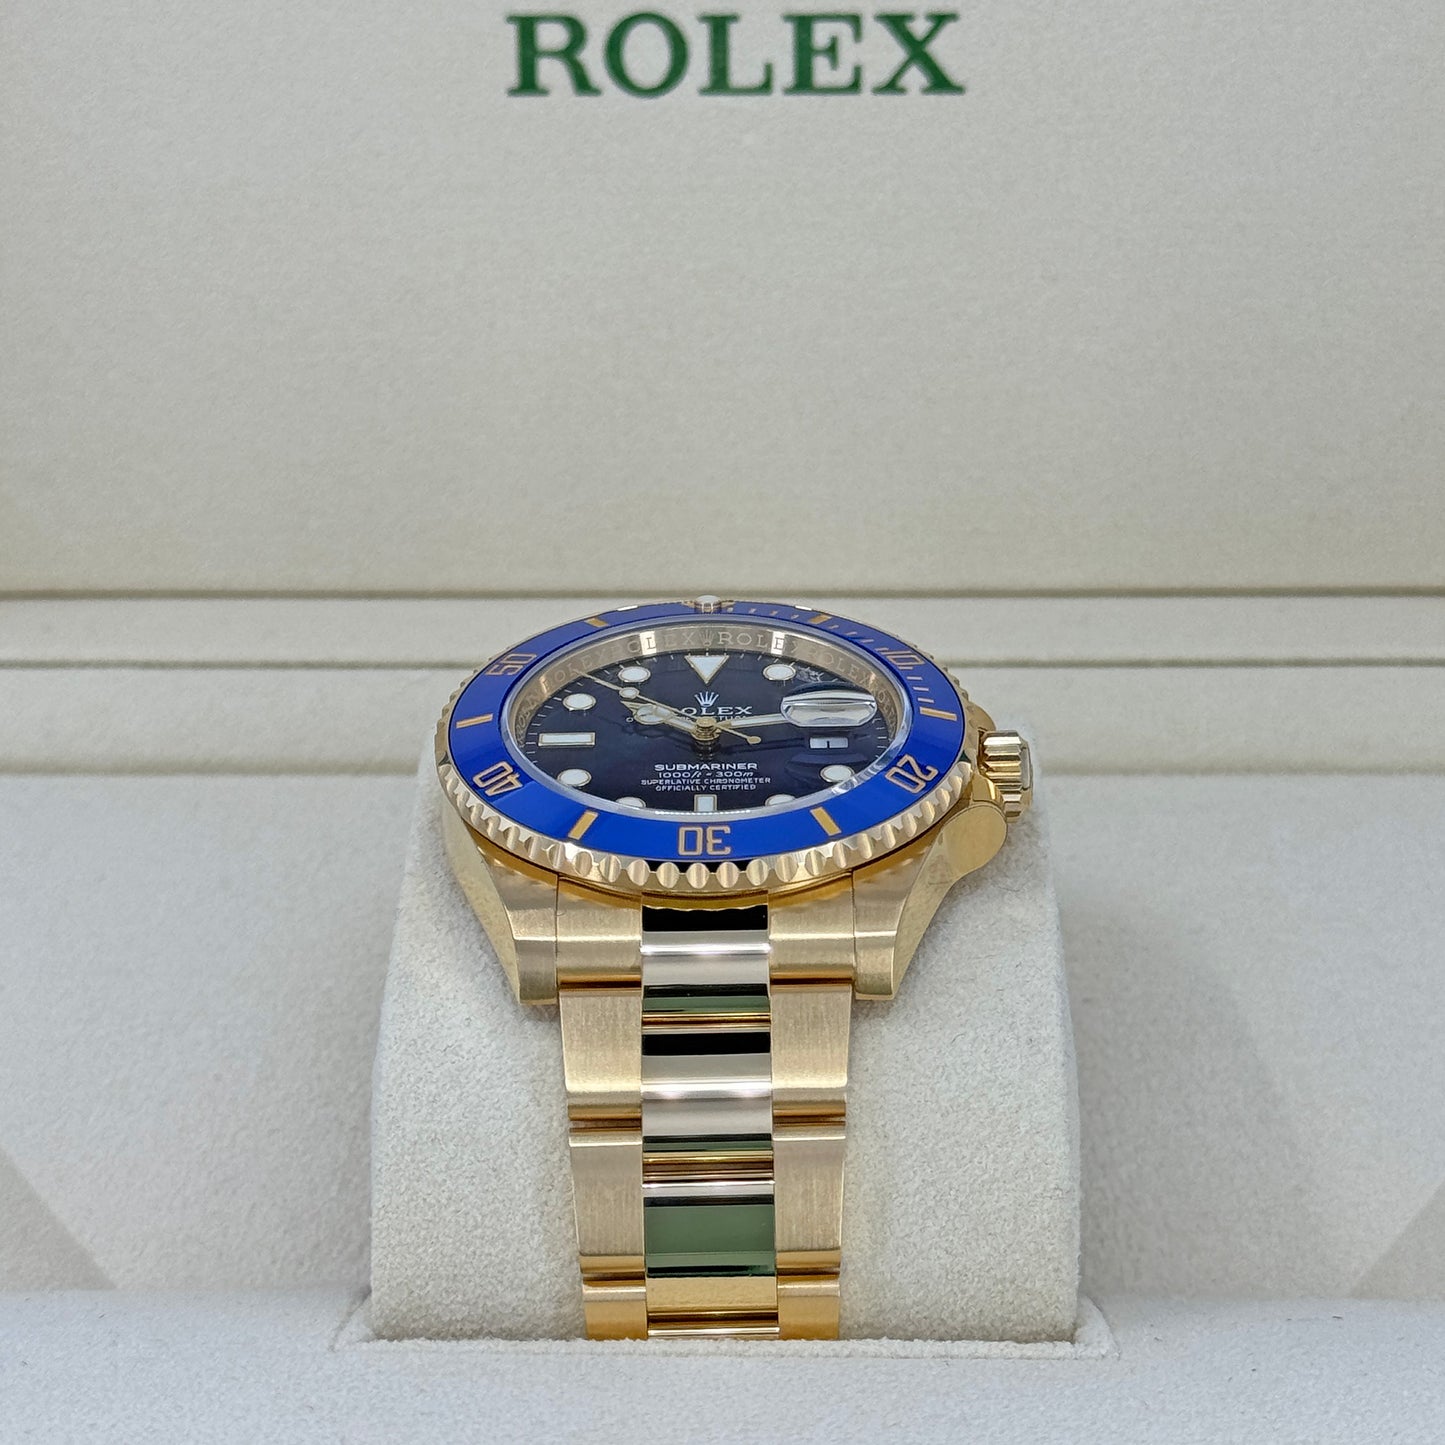 Rolex Submariner Date, 18k Yellow Gold, 41mm, Ref# 126618lb-0002